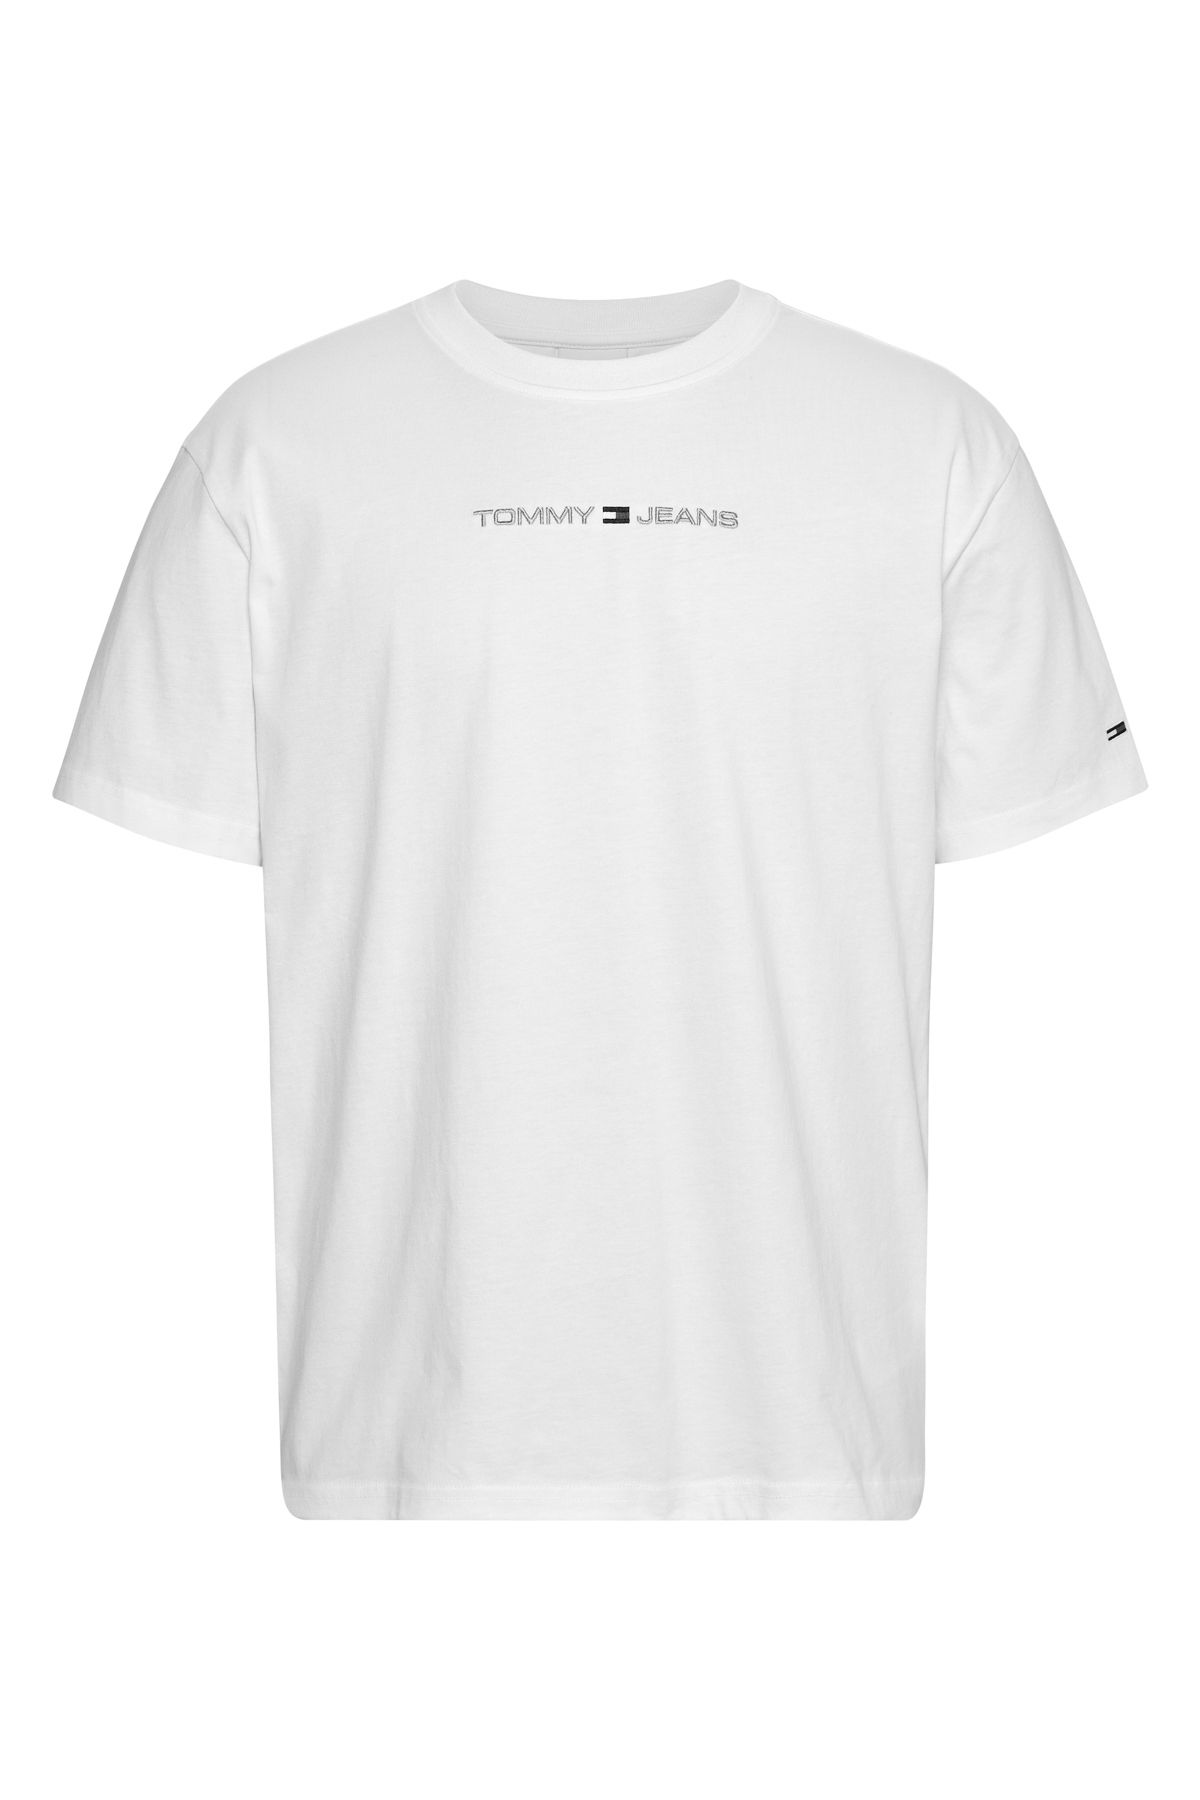 Fiyatı, Hilfiger - Tommy T-Shirt Trendyol White Erkek Yorumları